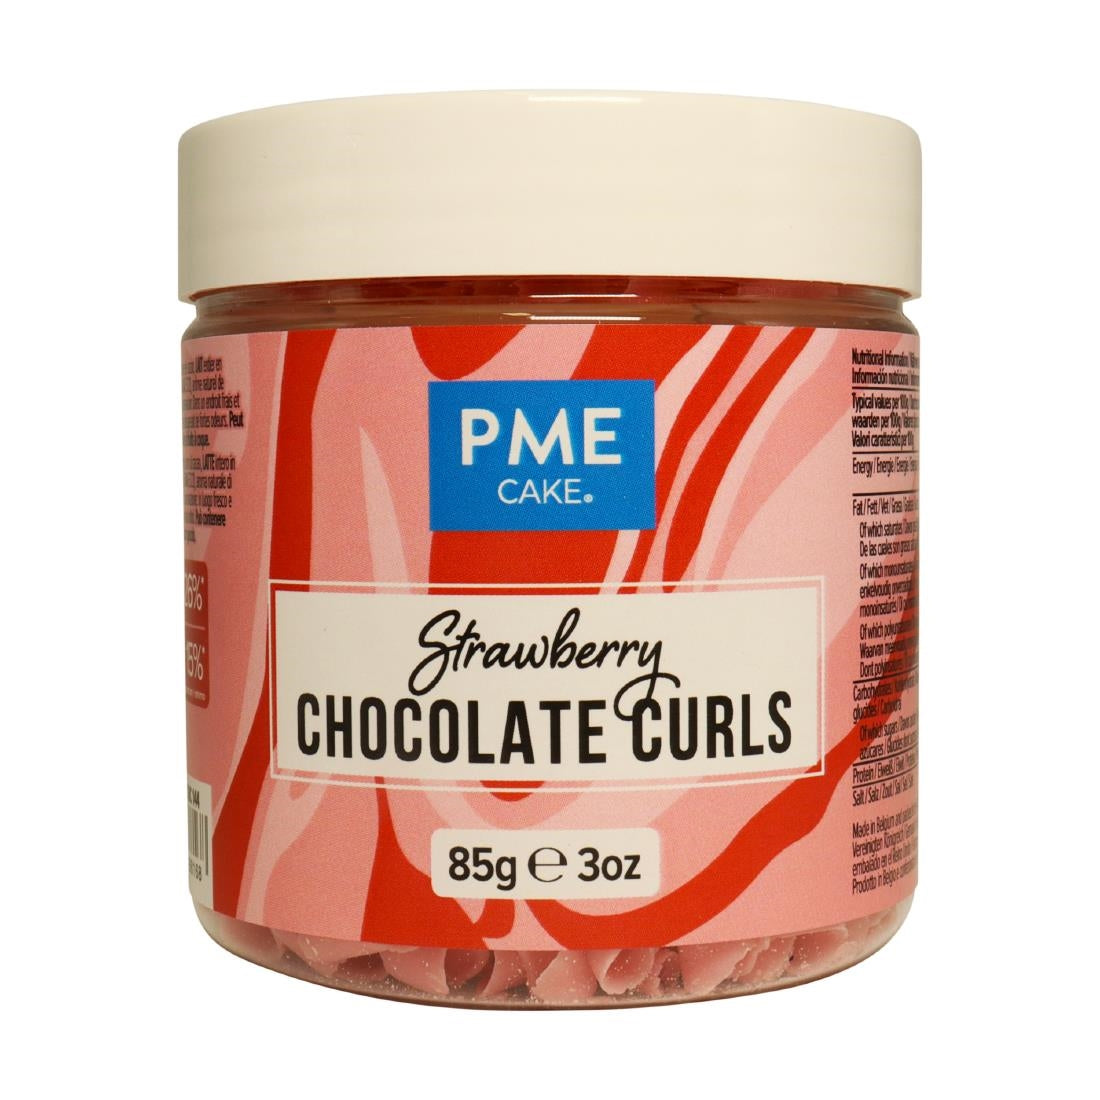 HU284 PME Chocolate Curls Strawberry 85g